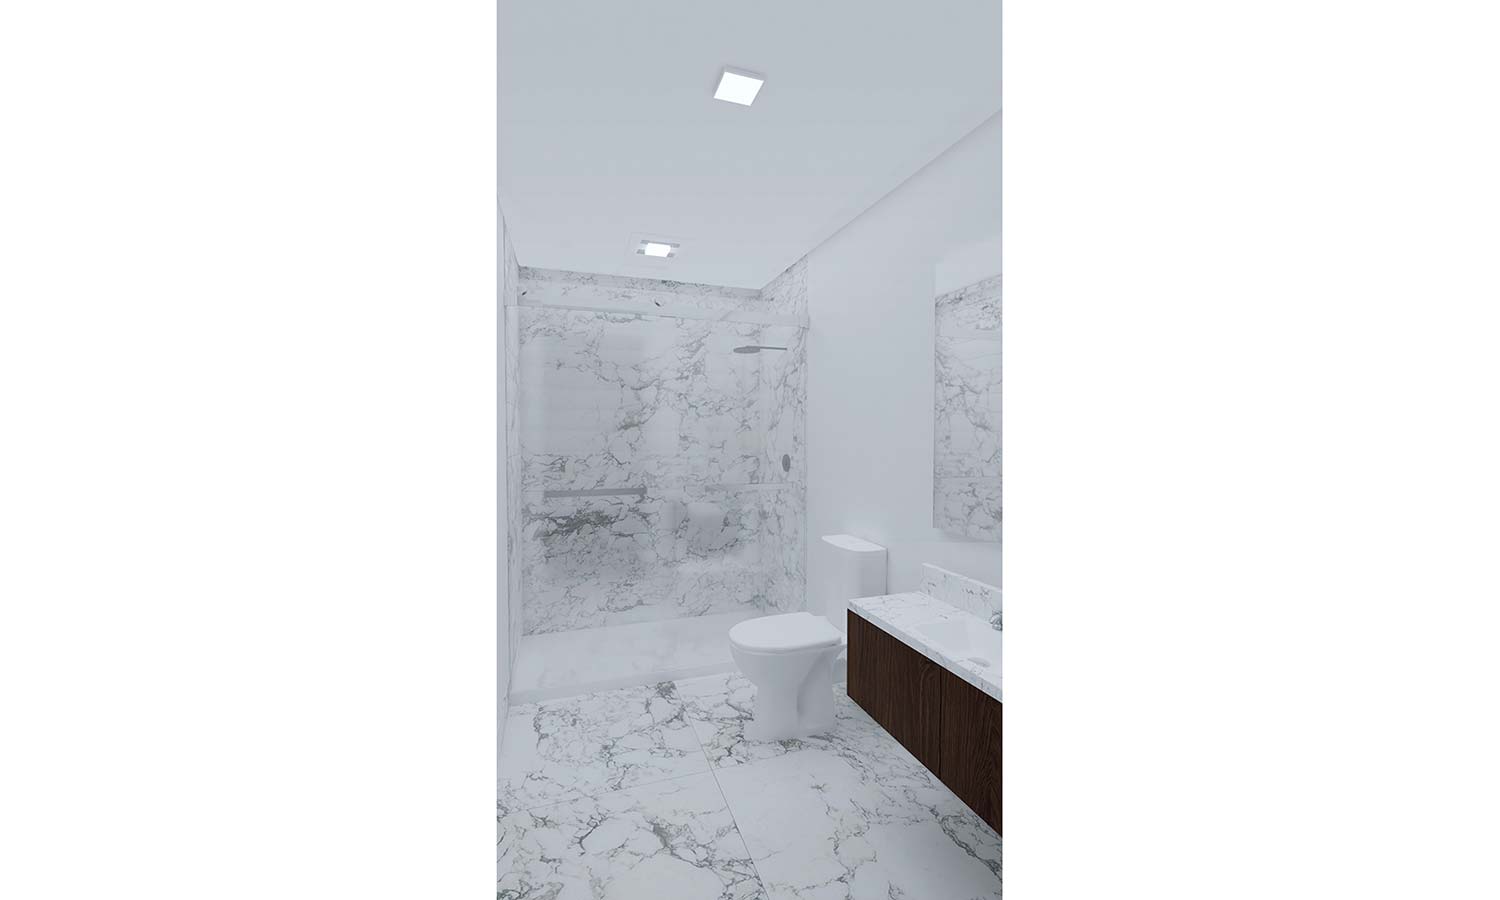 Tile bathroom with shower